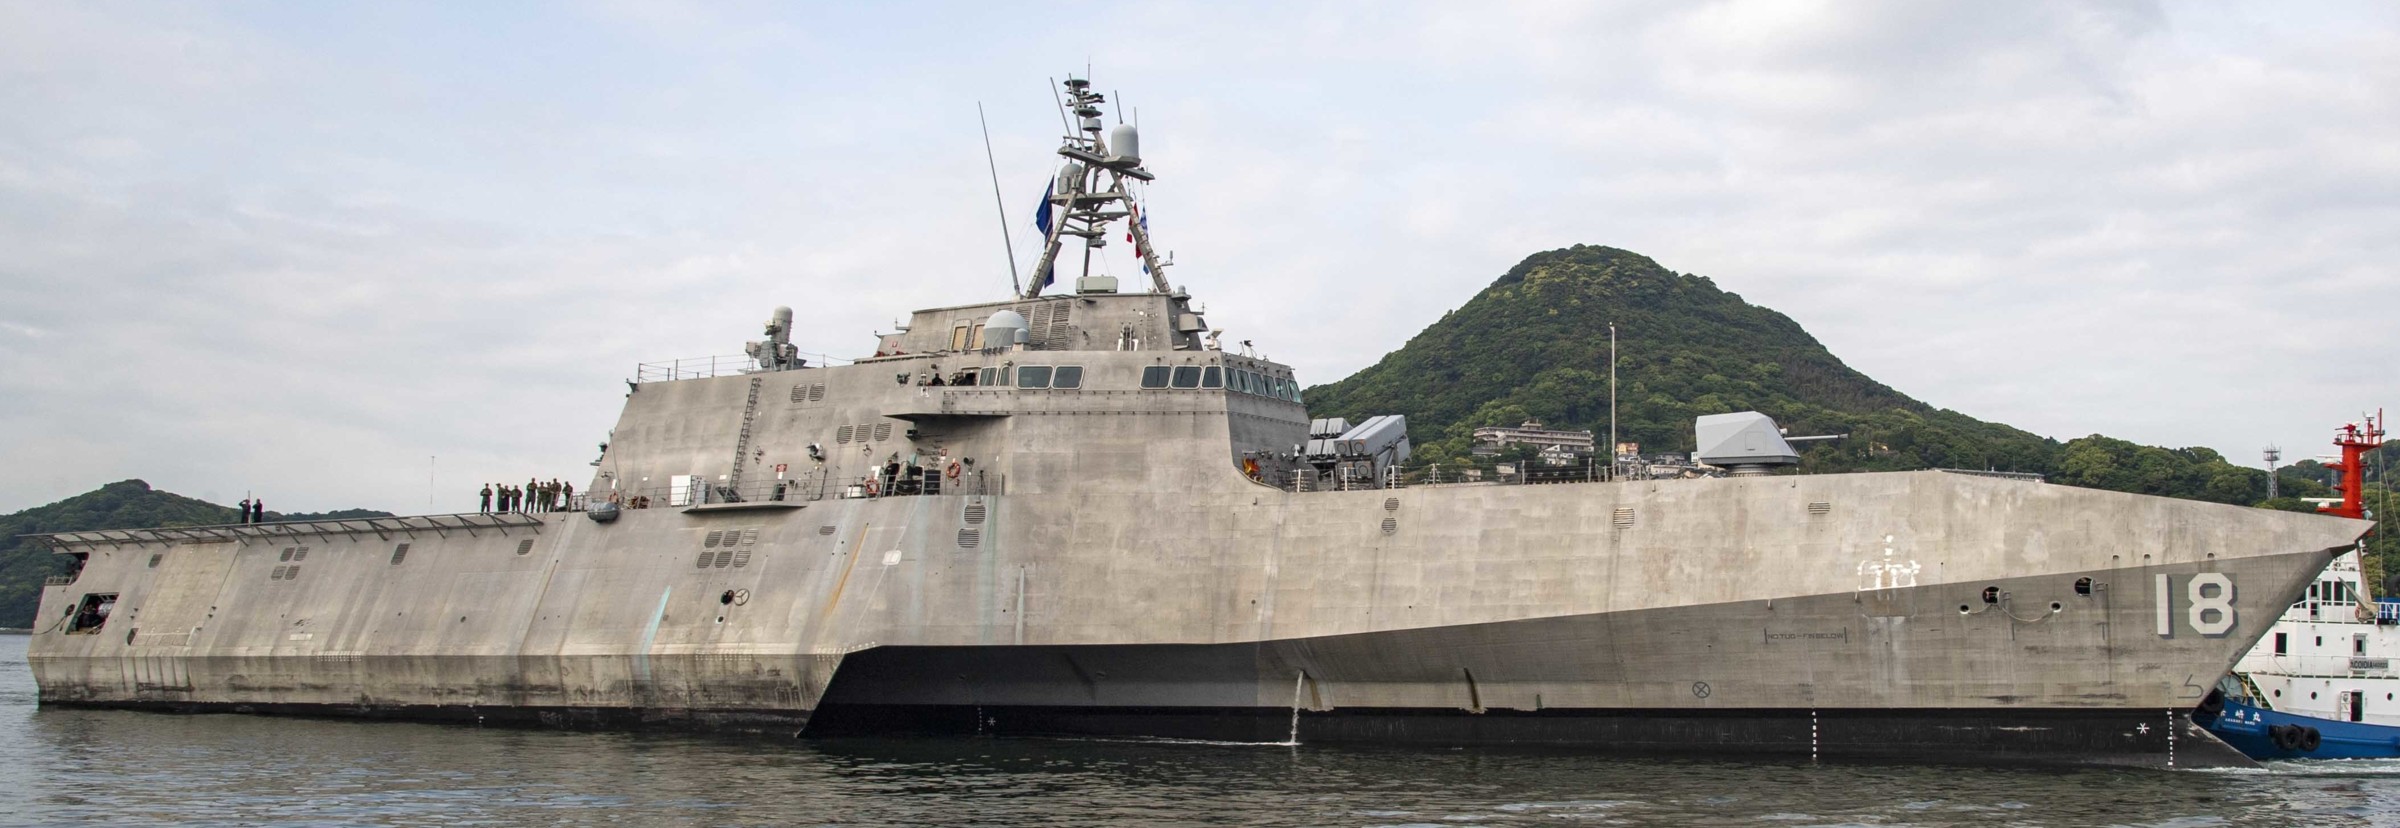 lcs-18 uss charleston independence class littoral combat ship us navy sasebo japan 73